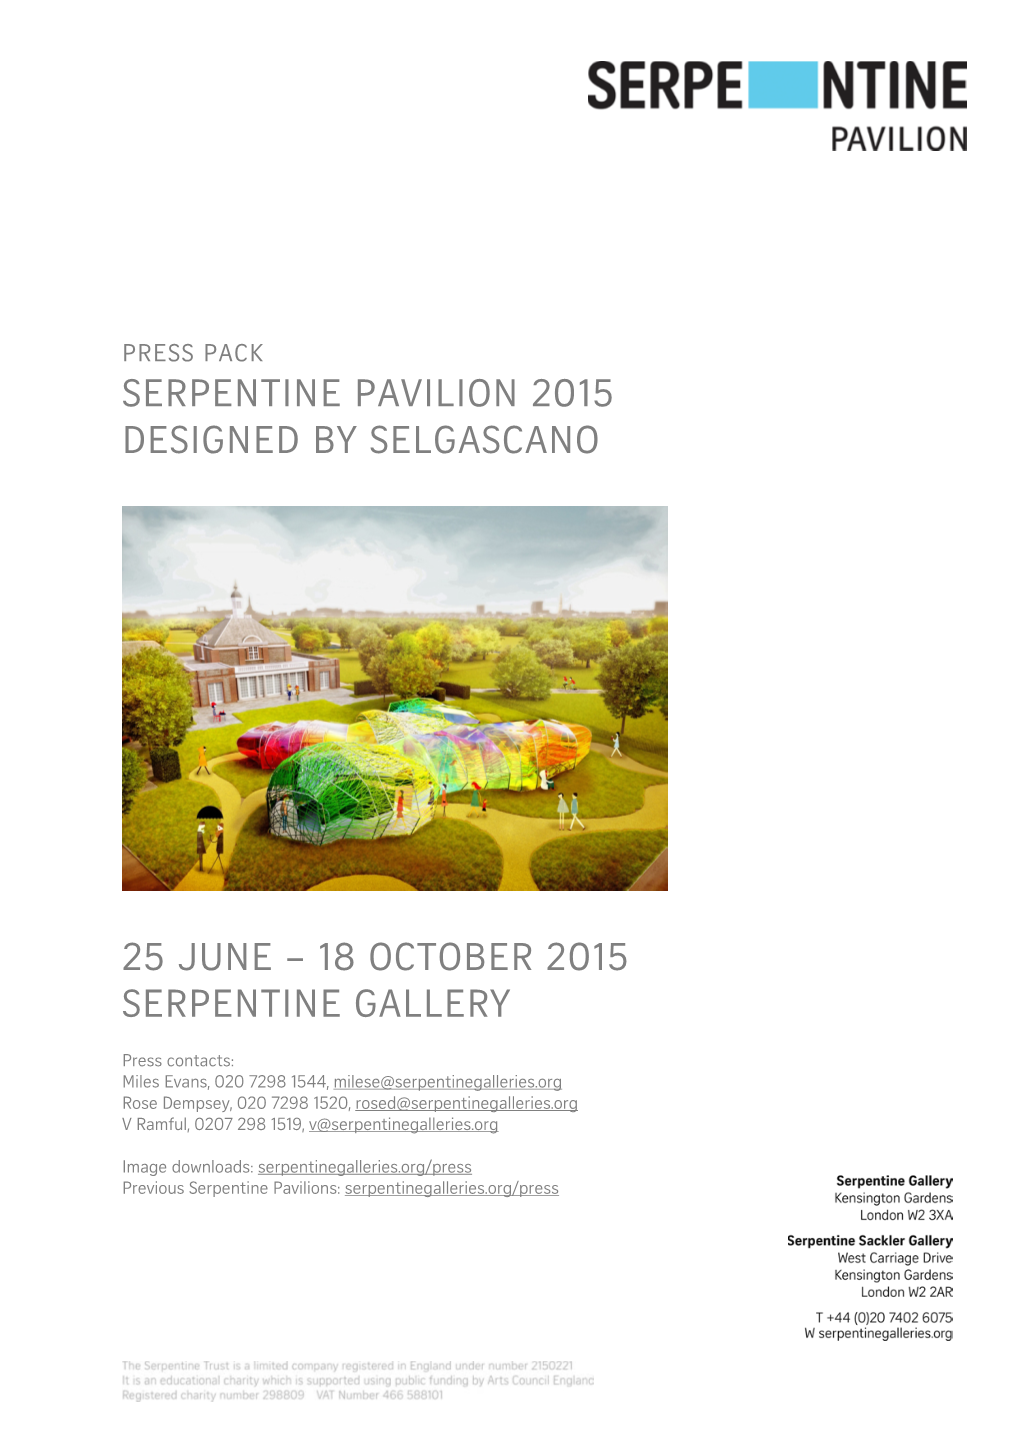 SERPENTINE PAVILION 2015 DESIGNED by SELGASCANO Sponsored by Goldman Sachs 25 June – 18 October 2015